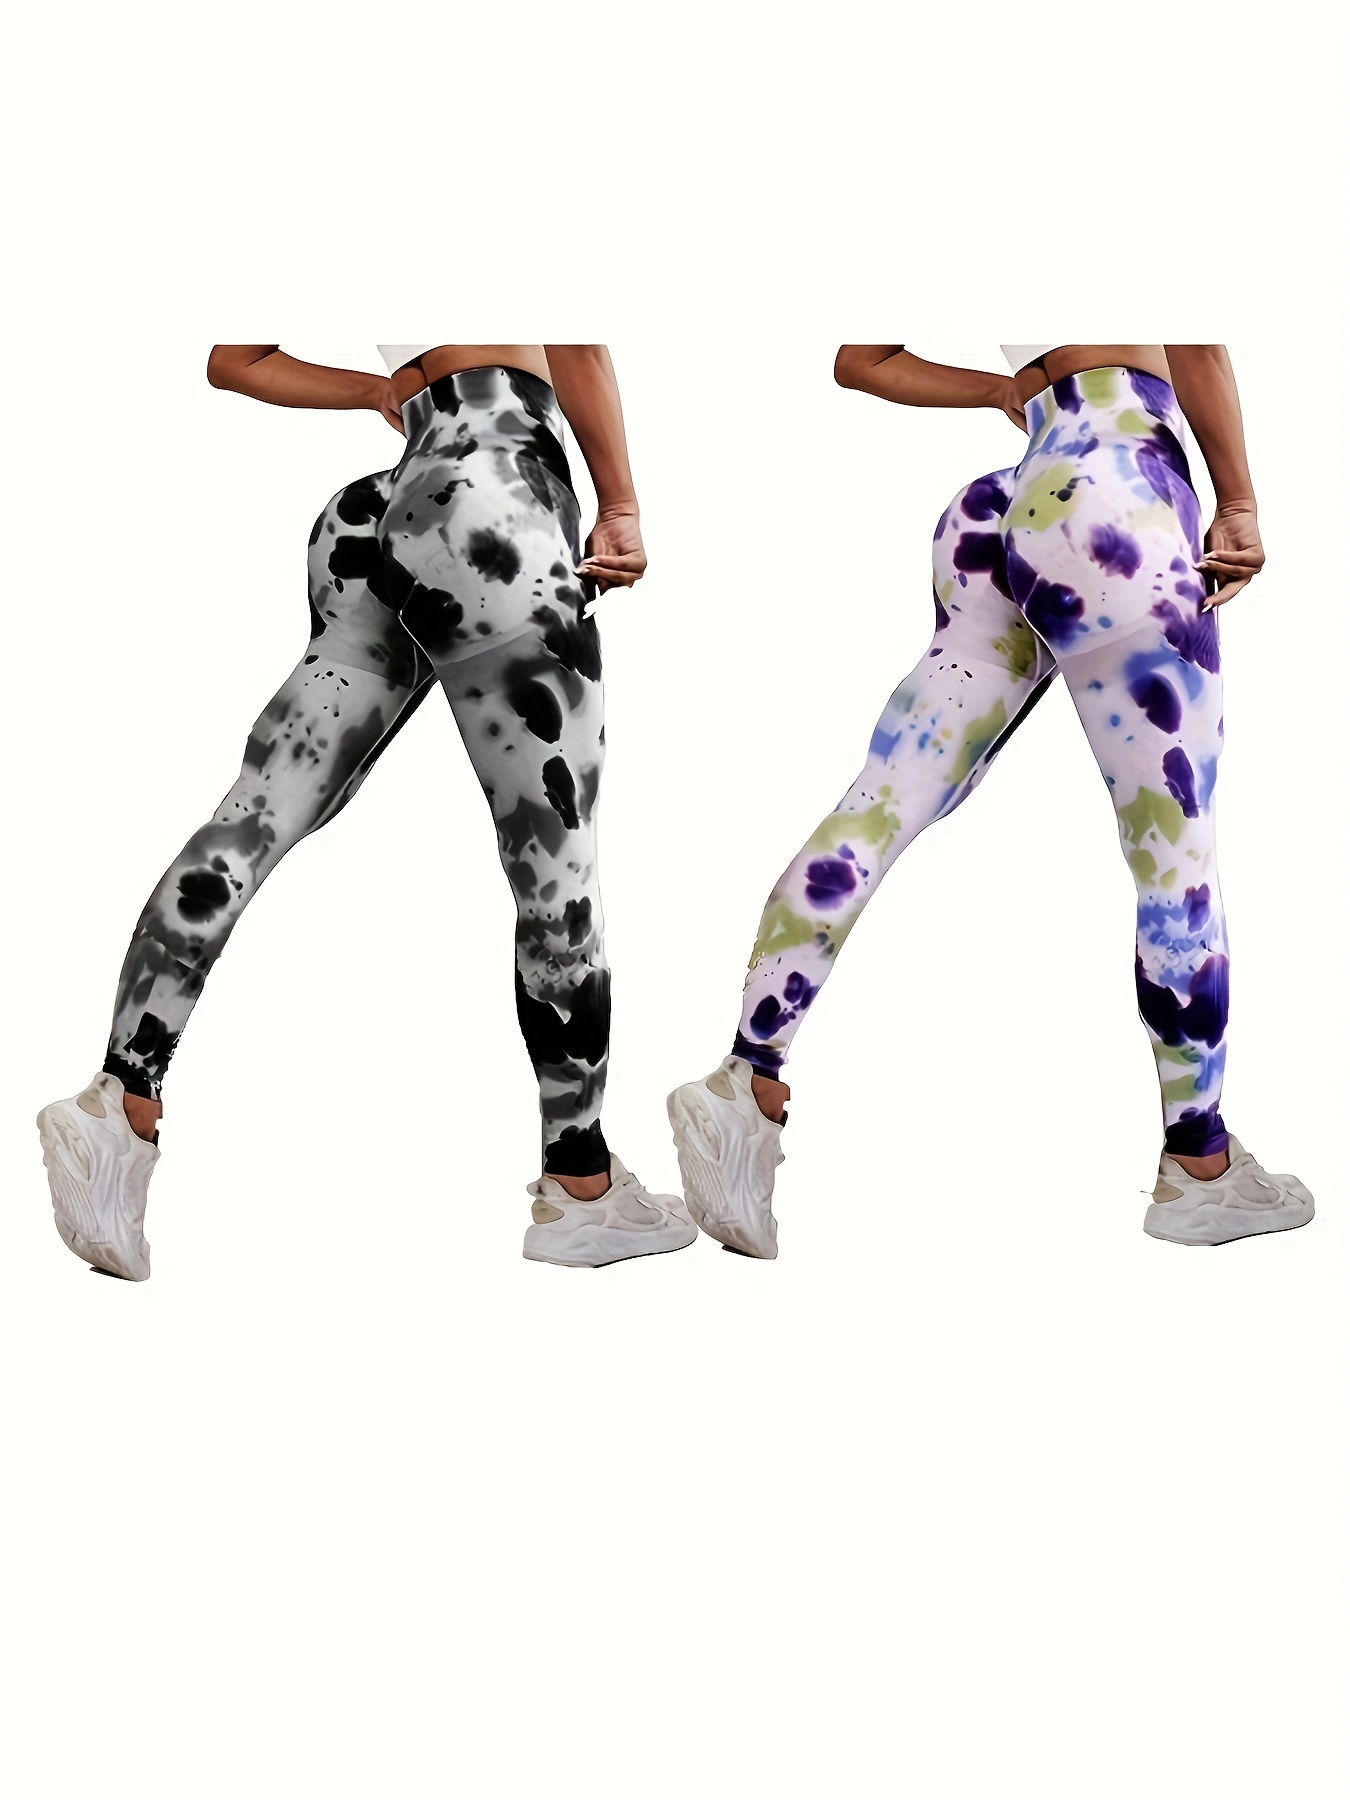 Butt Waisted Pants Short for Women Yoga Lifting 2PC High Leggings